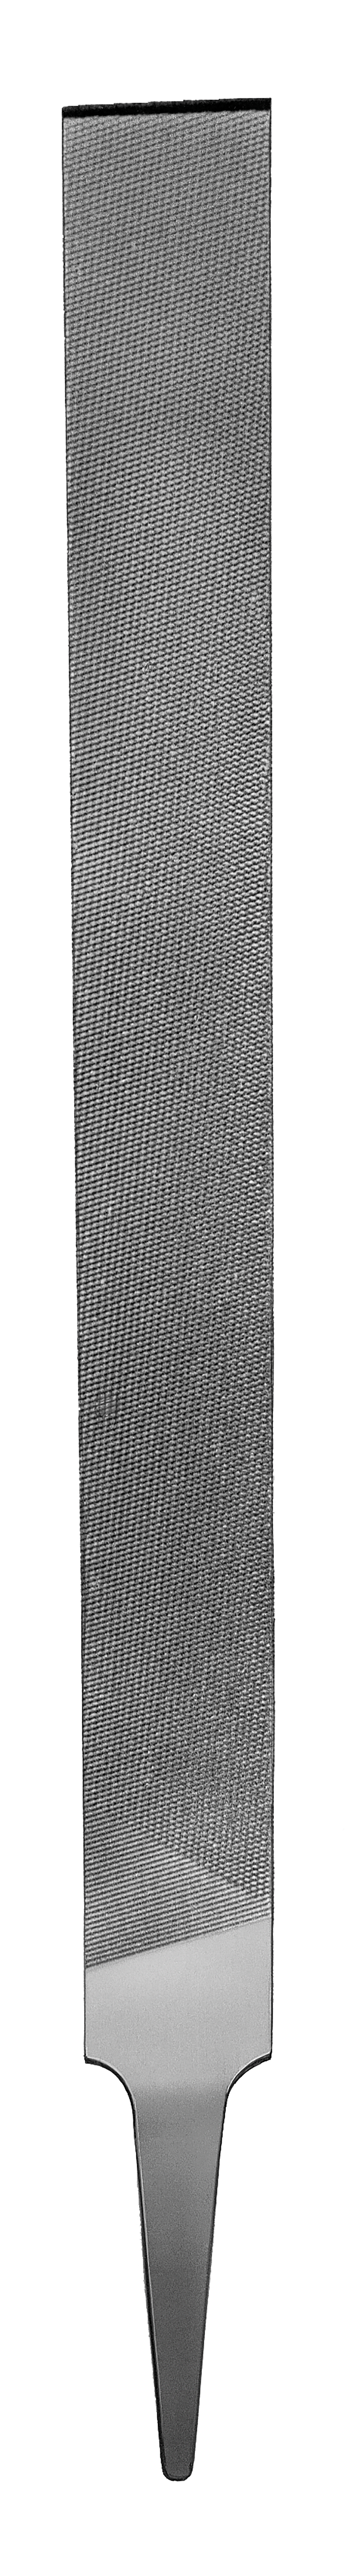 Foto of  Werkplaatsvijlen conform DIN 7261, vorm F, keep 1, 150 mm 